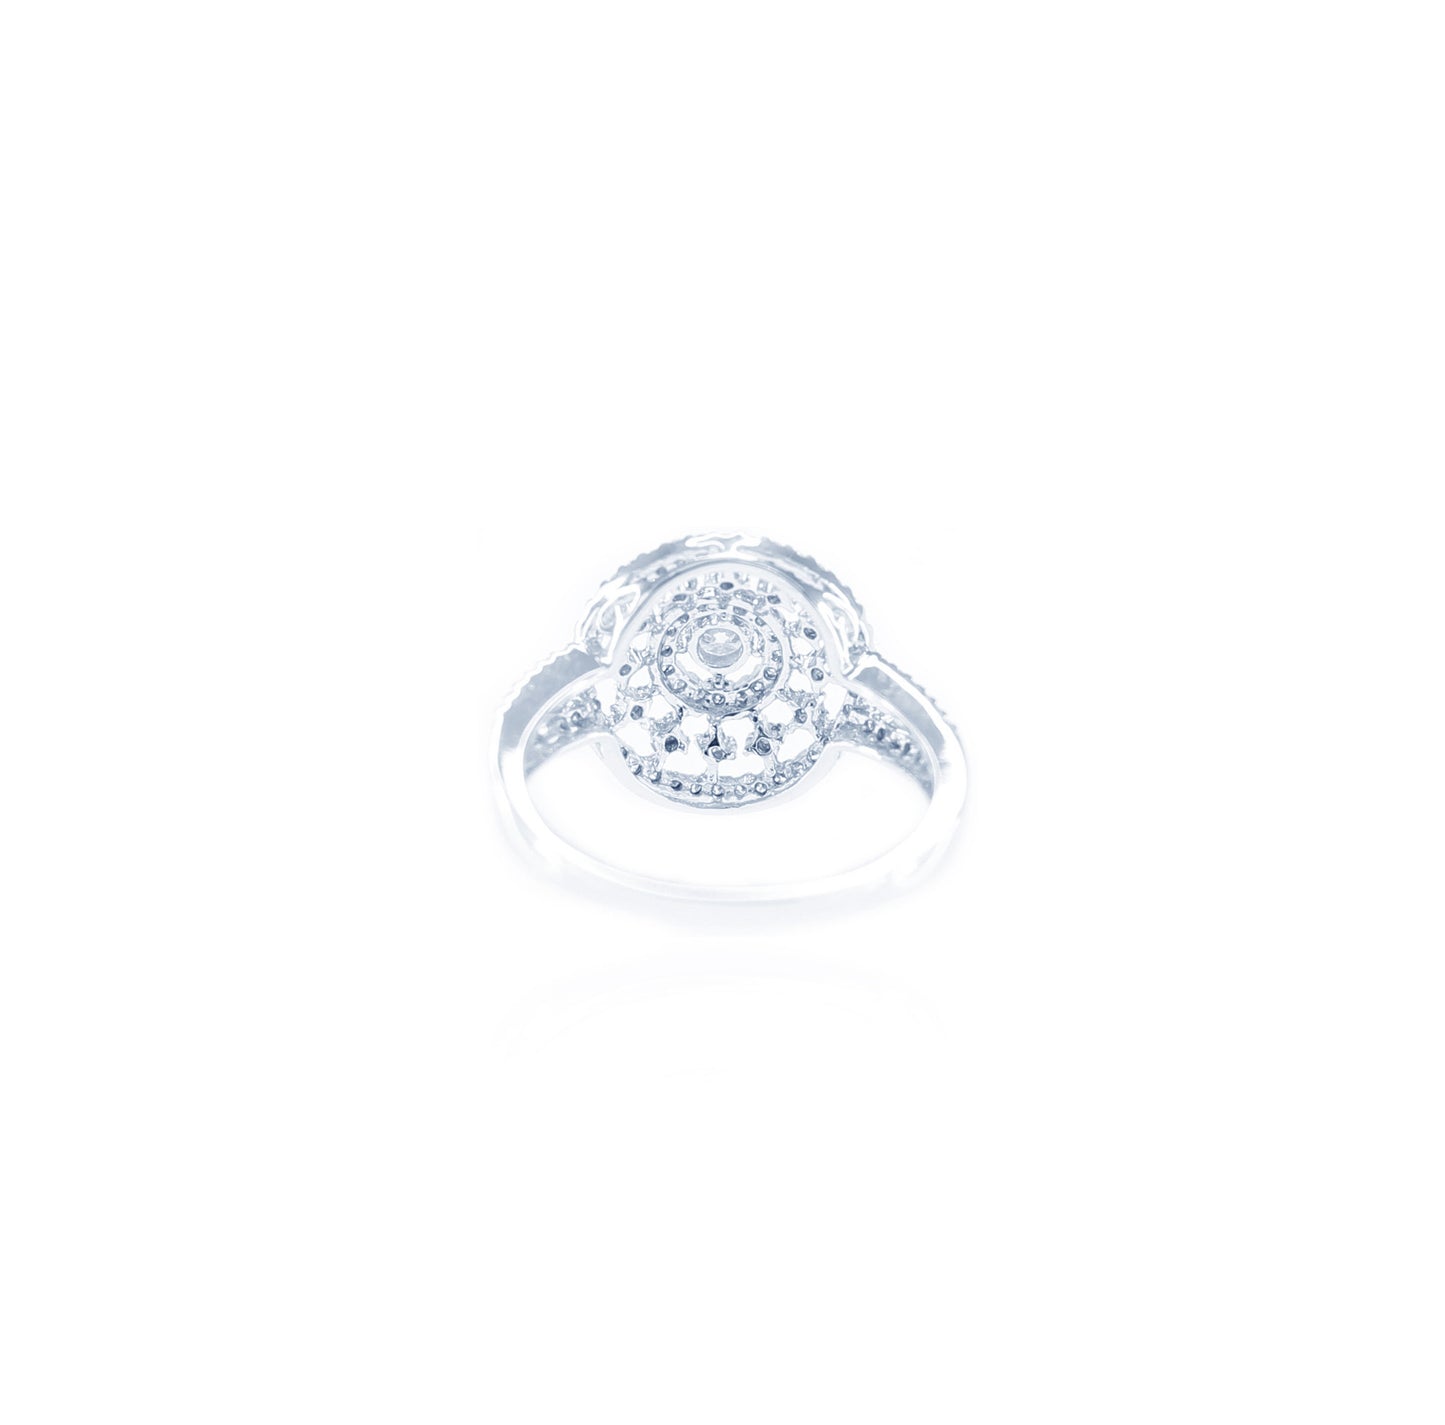 Sunburst Round Diamond Ring in 18K White Gold